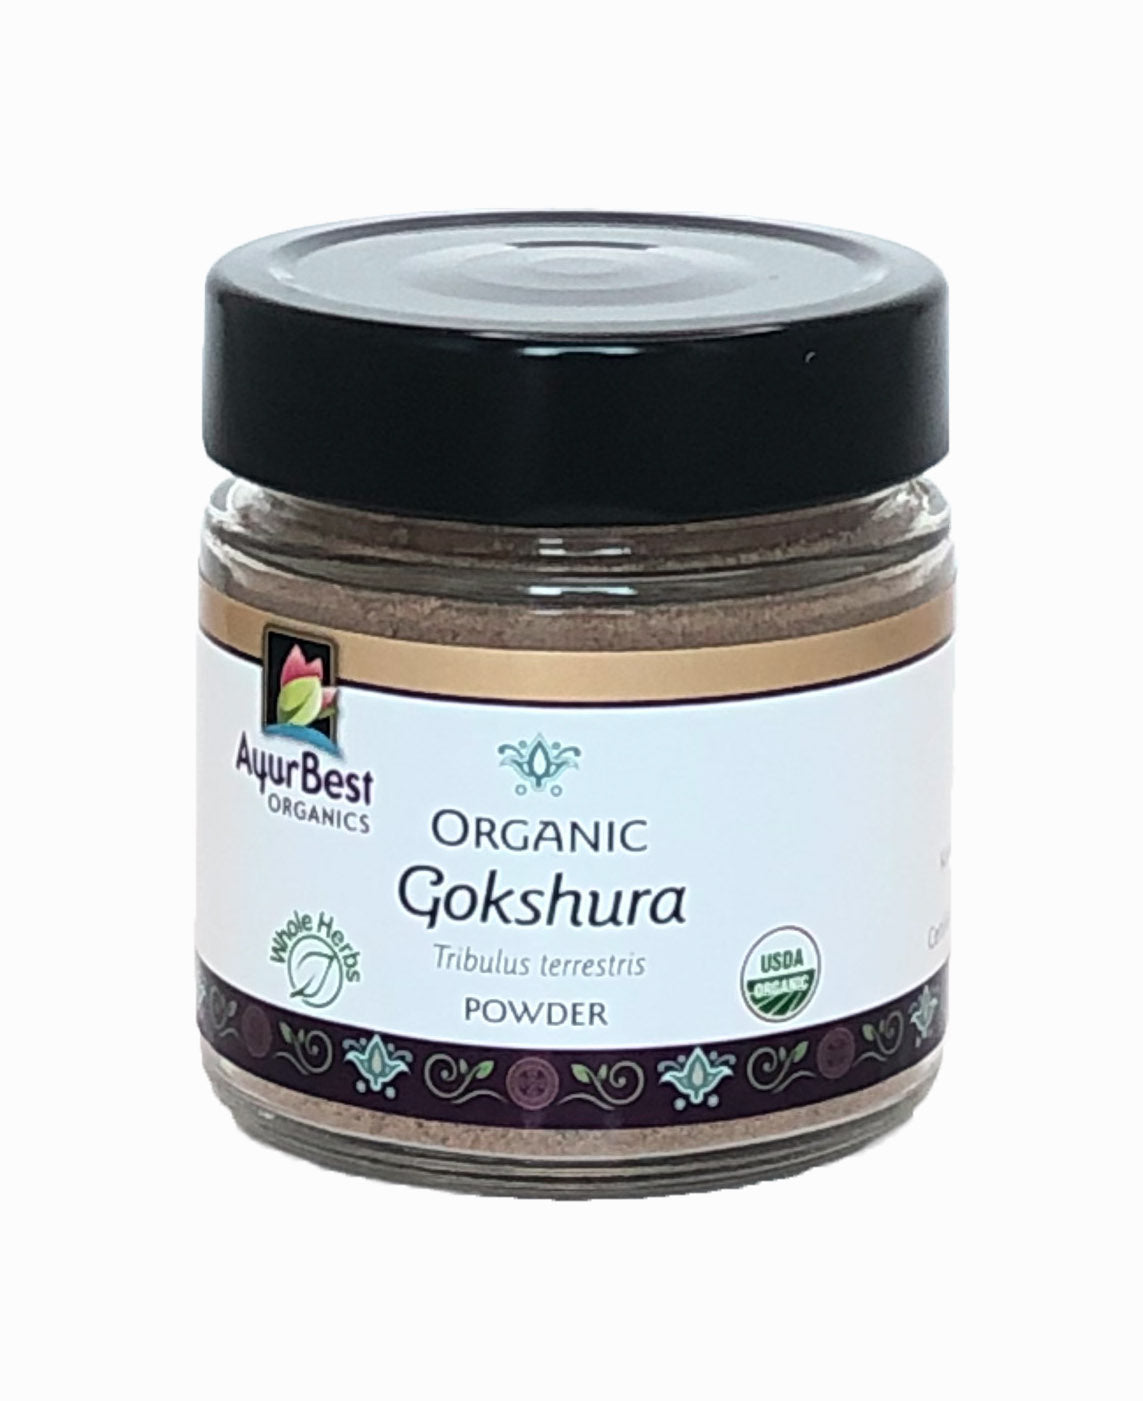 Wholesale Spices & Herbs - Gokshura Powder, Organic-Tribulus terrestris - 2.9oz(83g) Jar